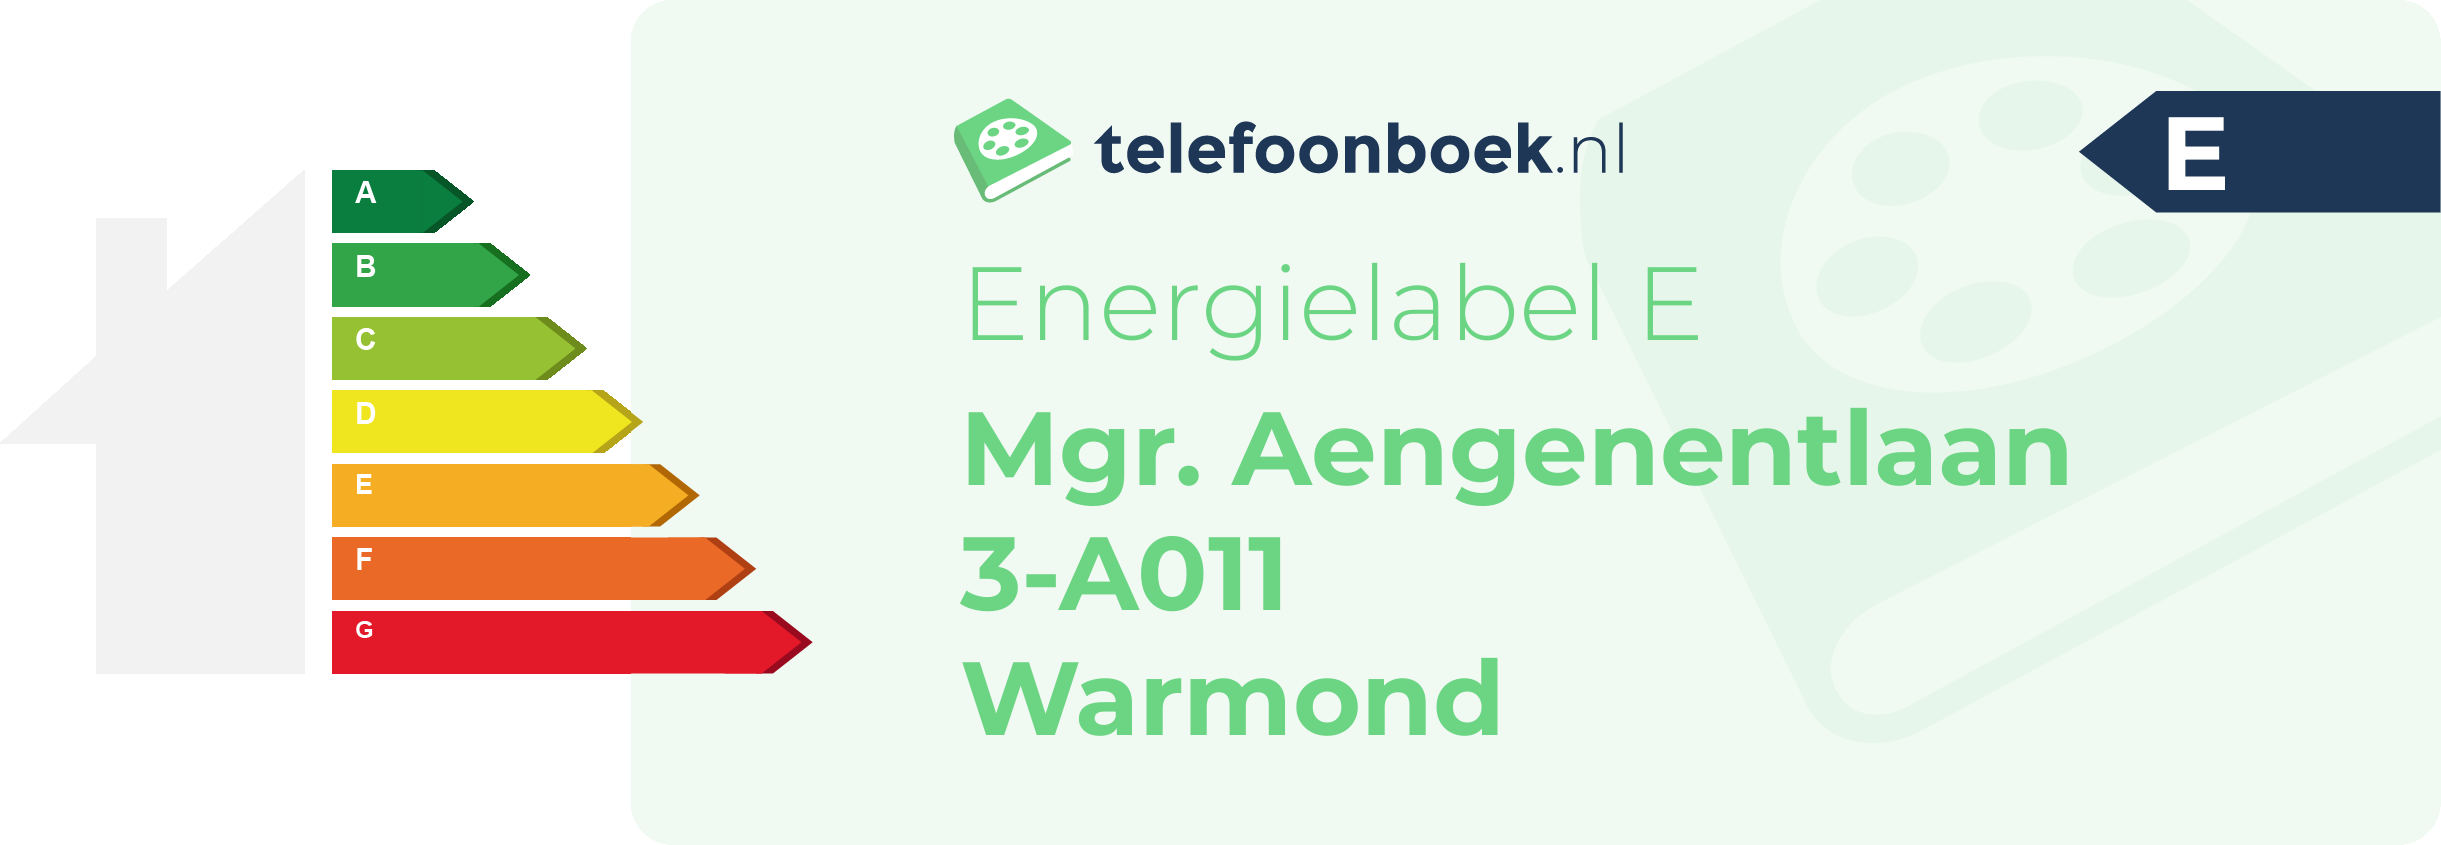 Energielabel Mgr. Aengenentlaan 3-A011 Warmond